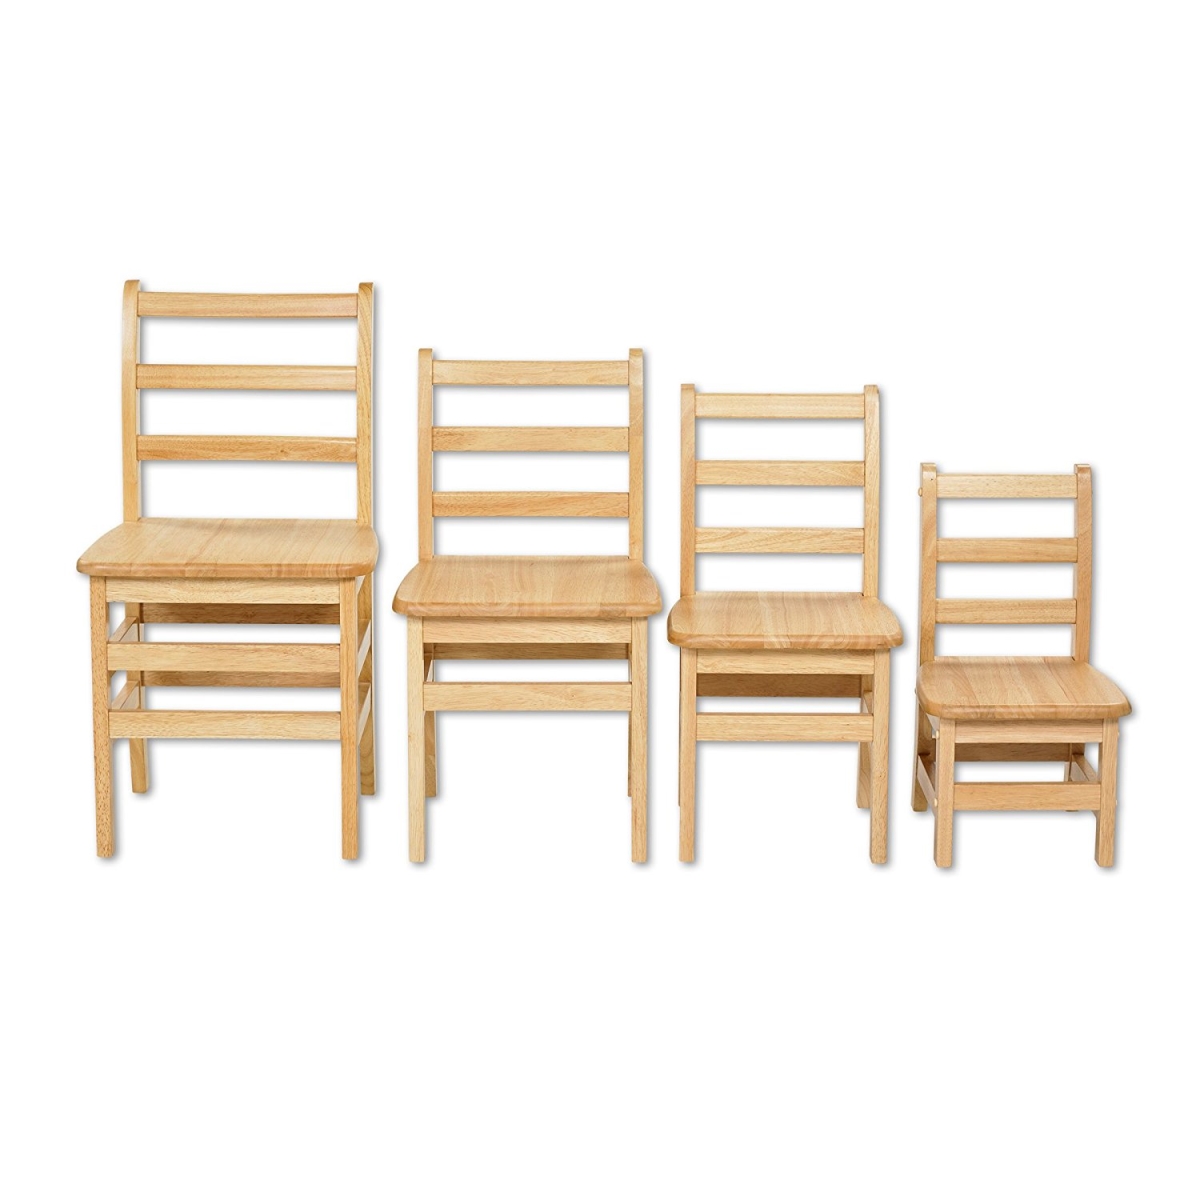 S Elr-15316 3-rung Ladderback Assembled Chair, 10 In. - Natural